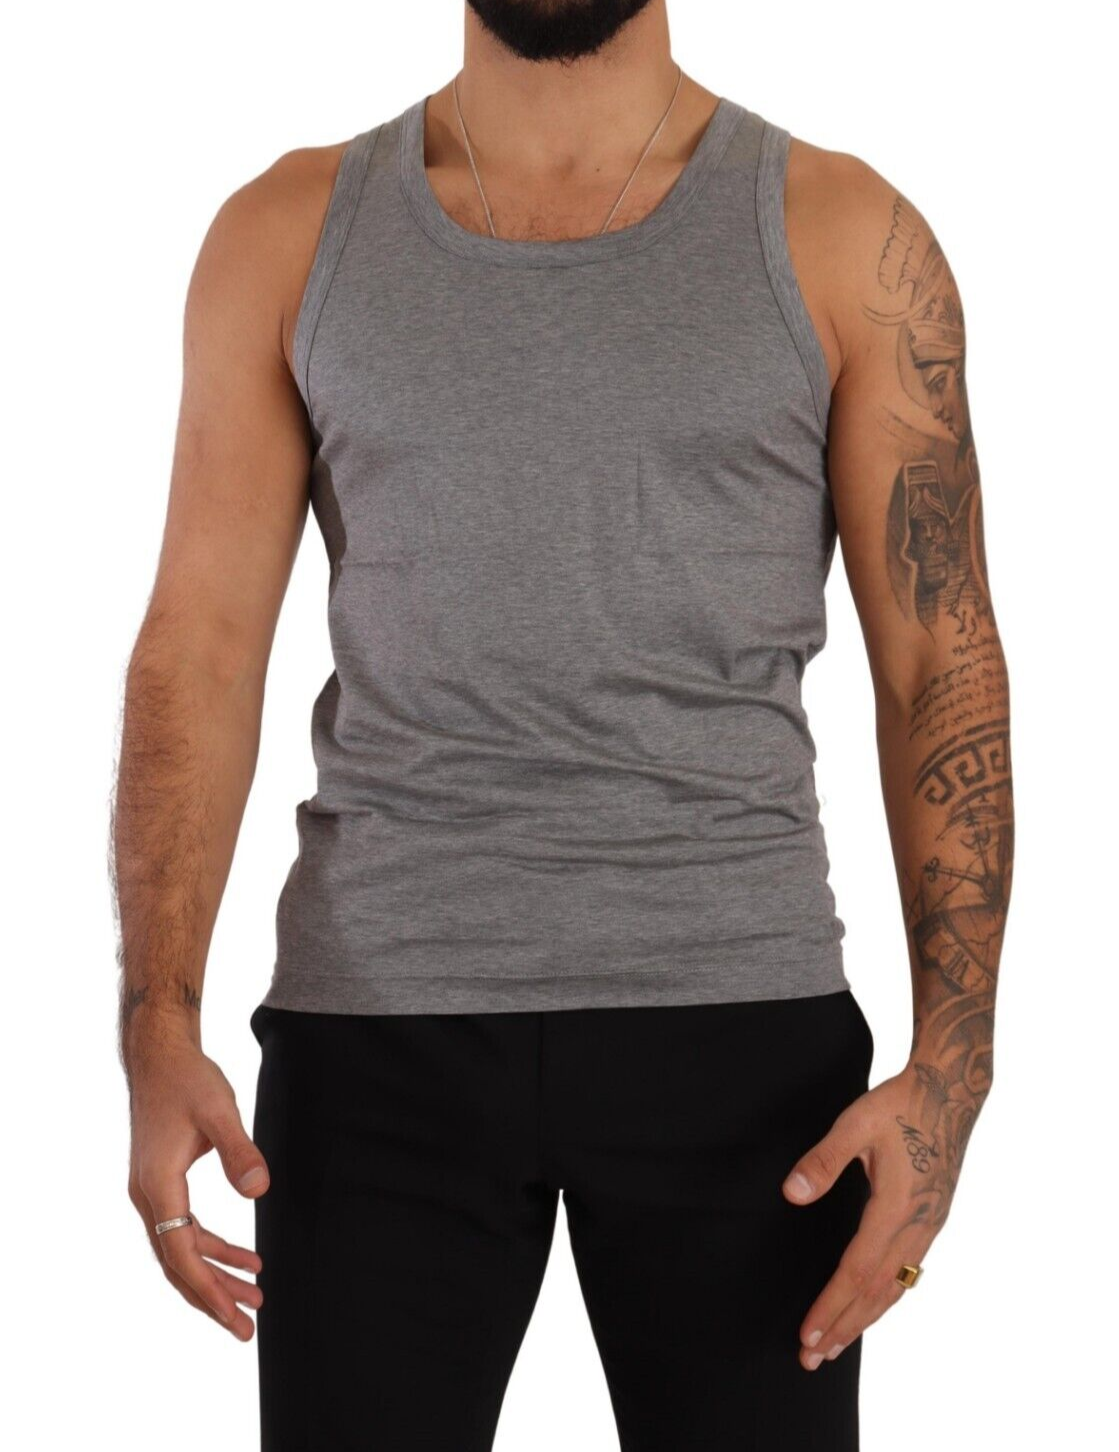 Dolce & Gabbana Gray Cotton Sleeveless Tank Top T-shirt Underwear